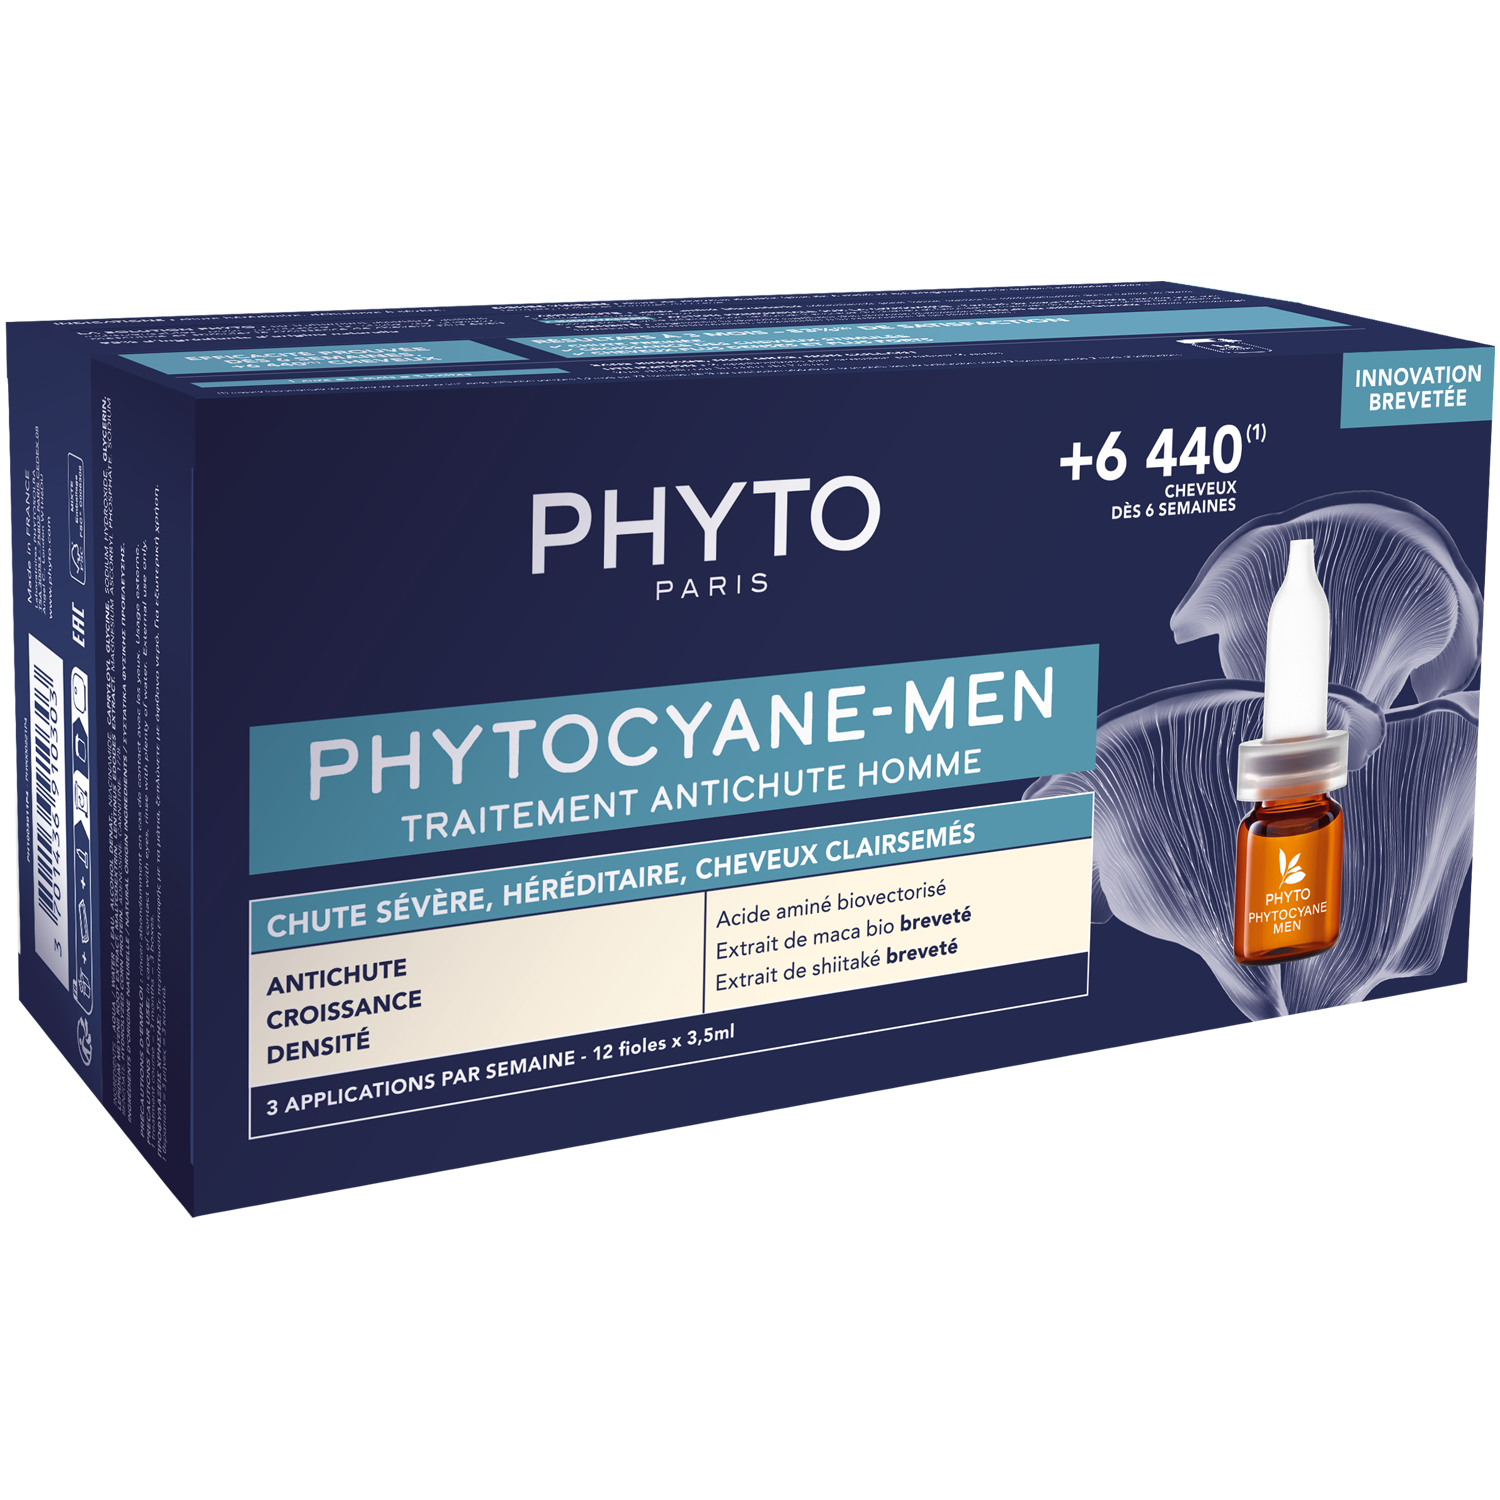 Phyto Phytocyane-Men средство против выпадения волос, 50 ​​мл phyto сыворотка против выпадения волос для мужчин 12 флаконов х 3 5 мл phyto phytocyane